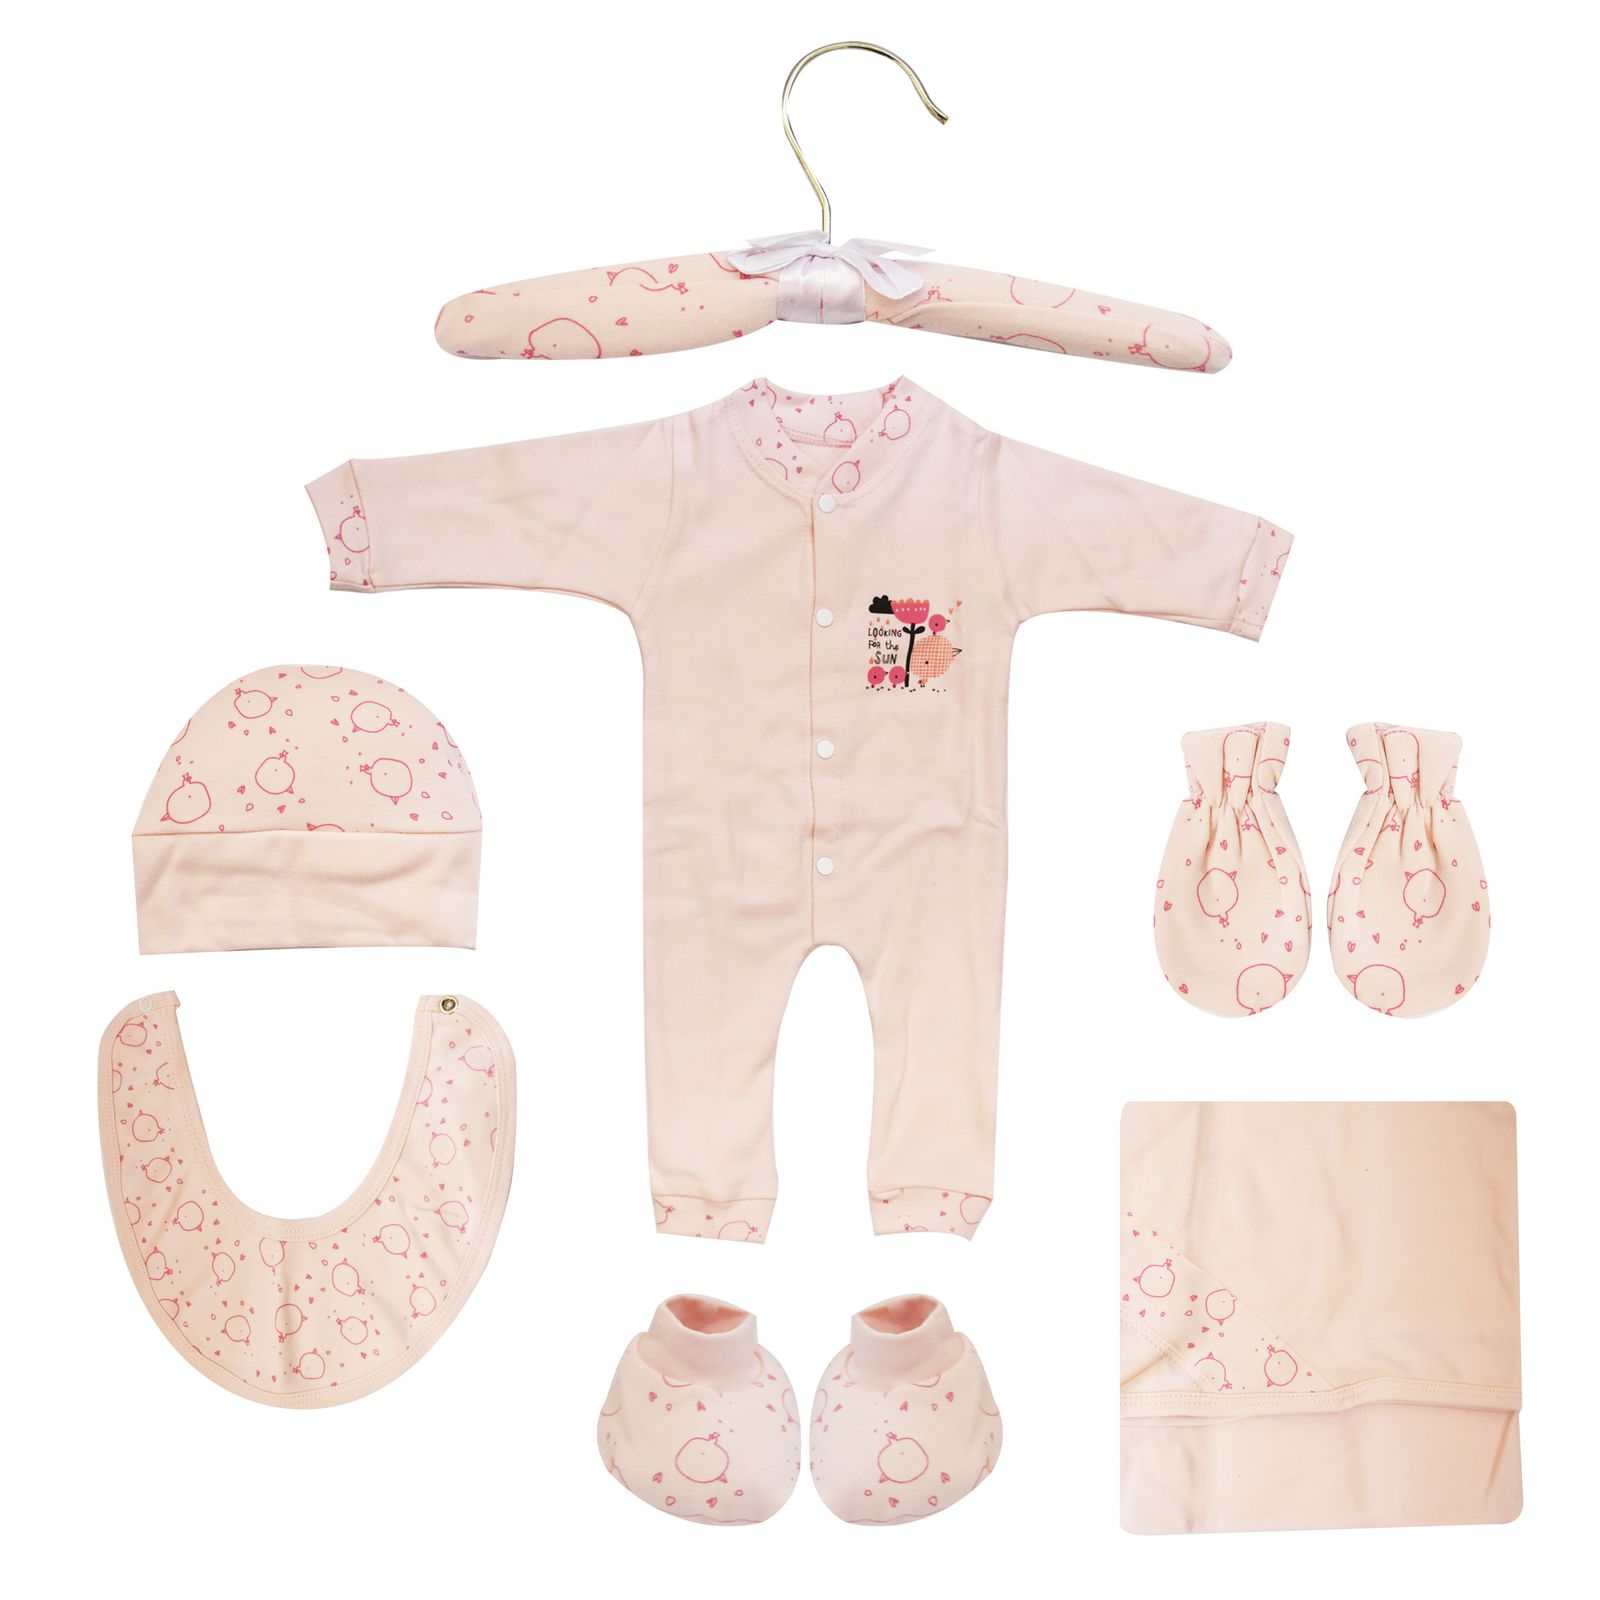 ست 7 تکه لباس نوزادی مادرکر طرح بلبل کد M454.5 -  - 1